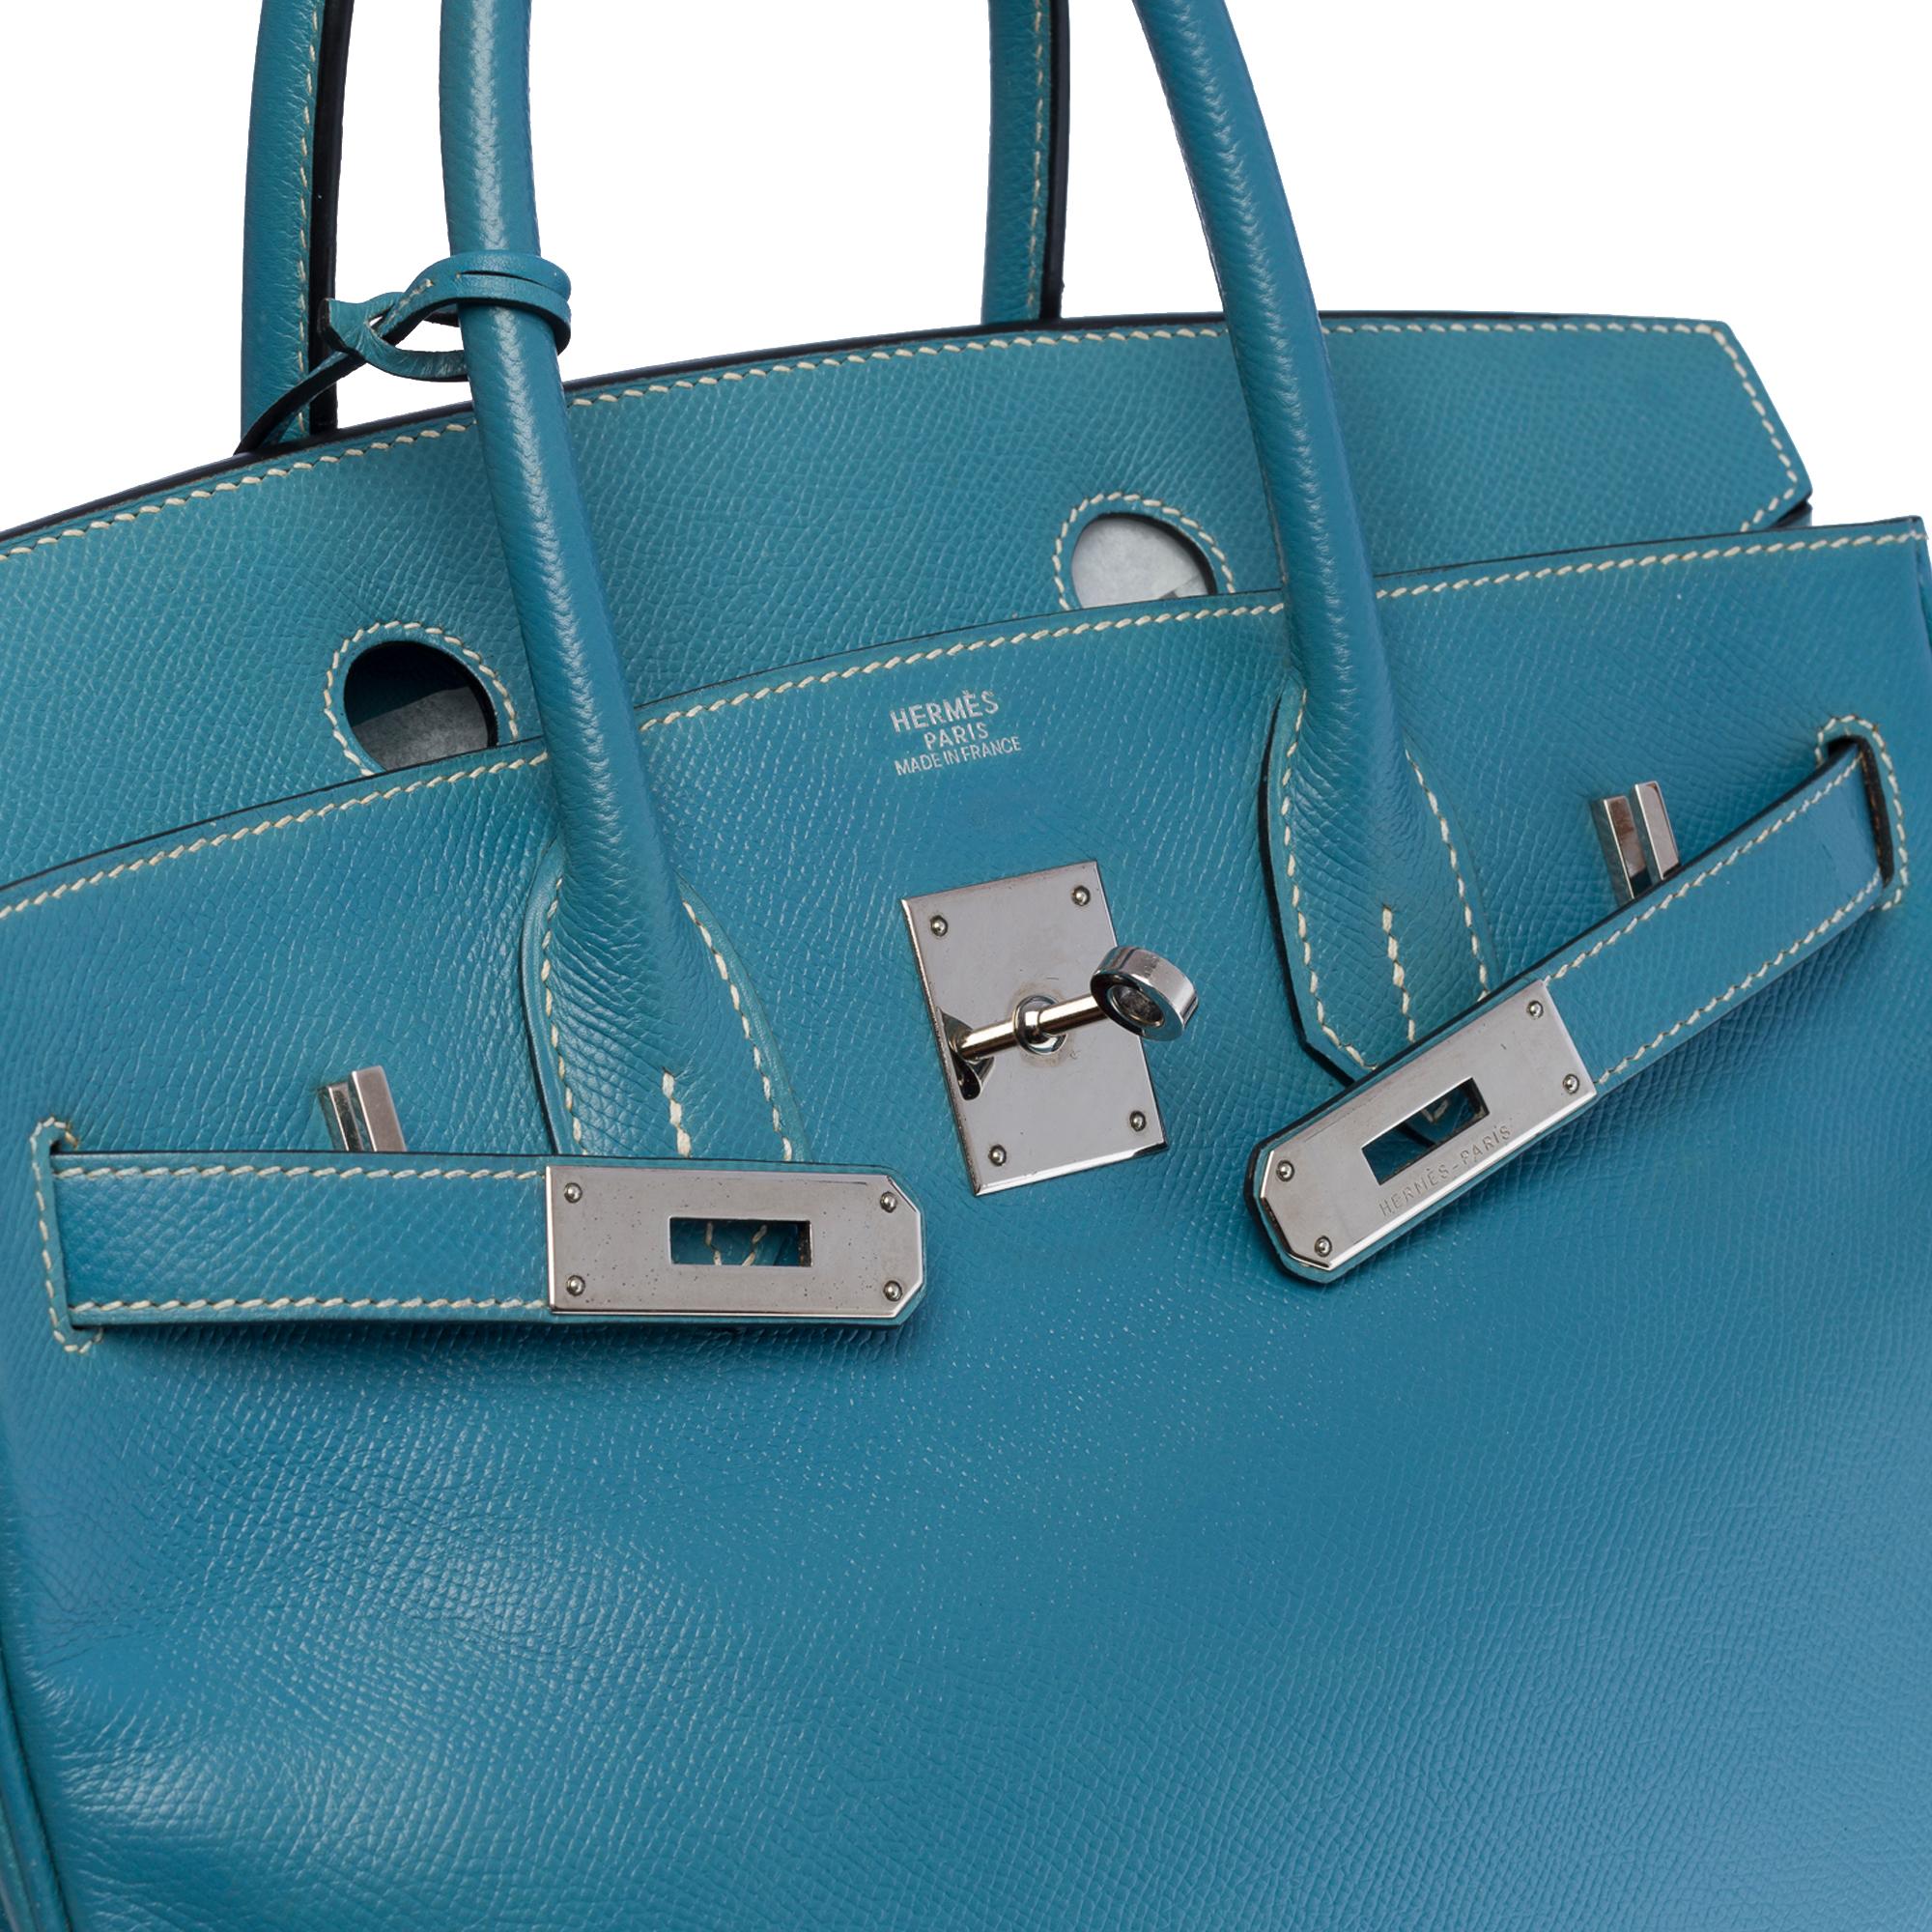 Stunning Hermès Birkin 30 handbag in Blue Jeans Epsom leather, SHW 1